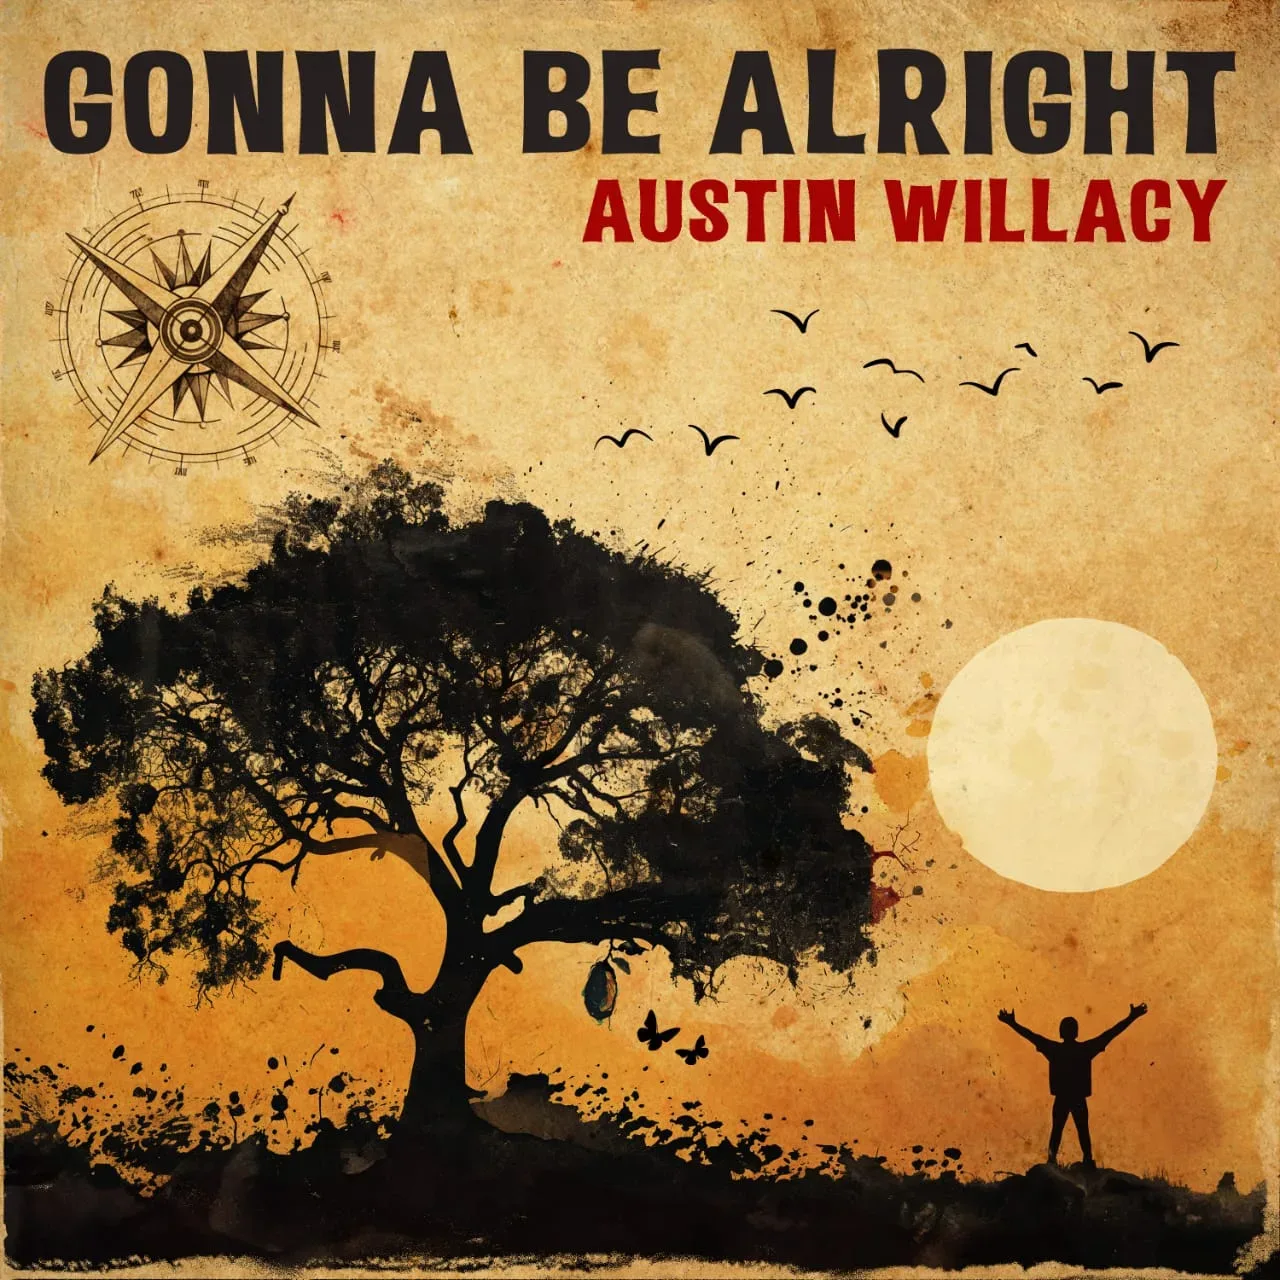 Austin Willacy